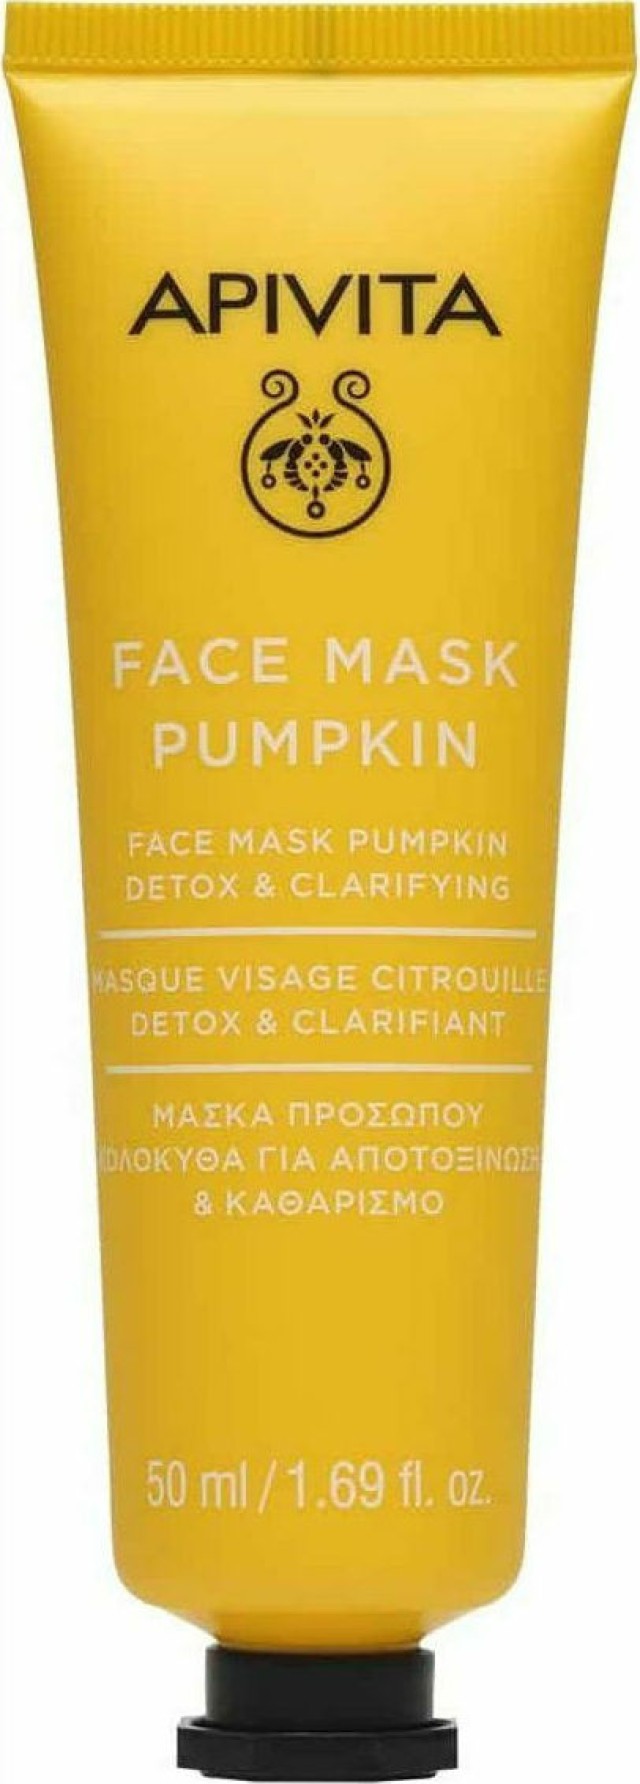 Apivita Face Mask Pumpkin Μάσκα Προσώπου Κολοκύθα για Αποτοξίνωση - Καθαρισμό 50ml